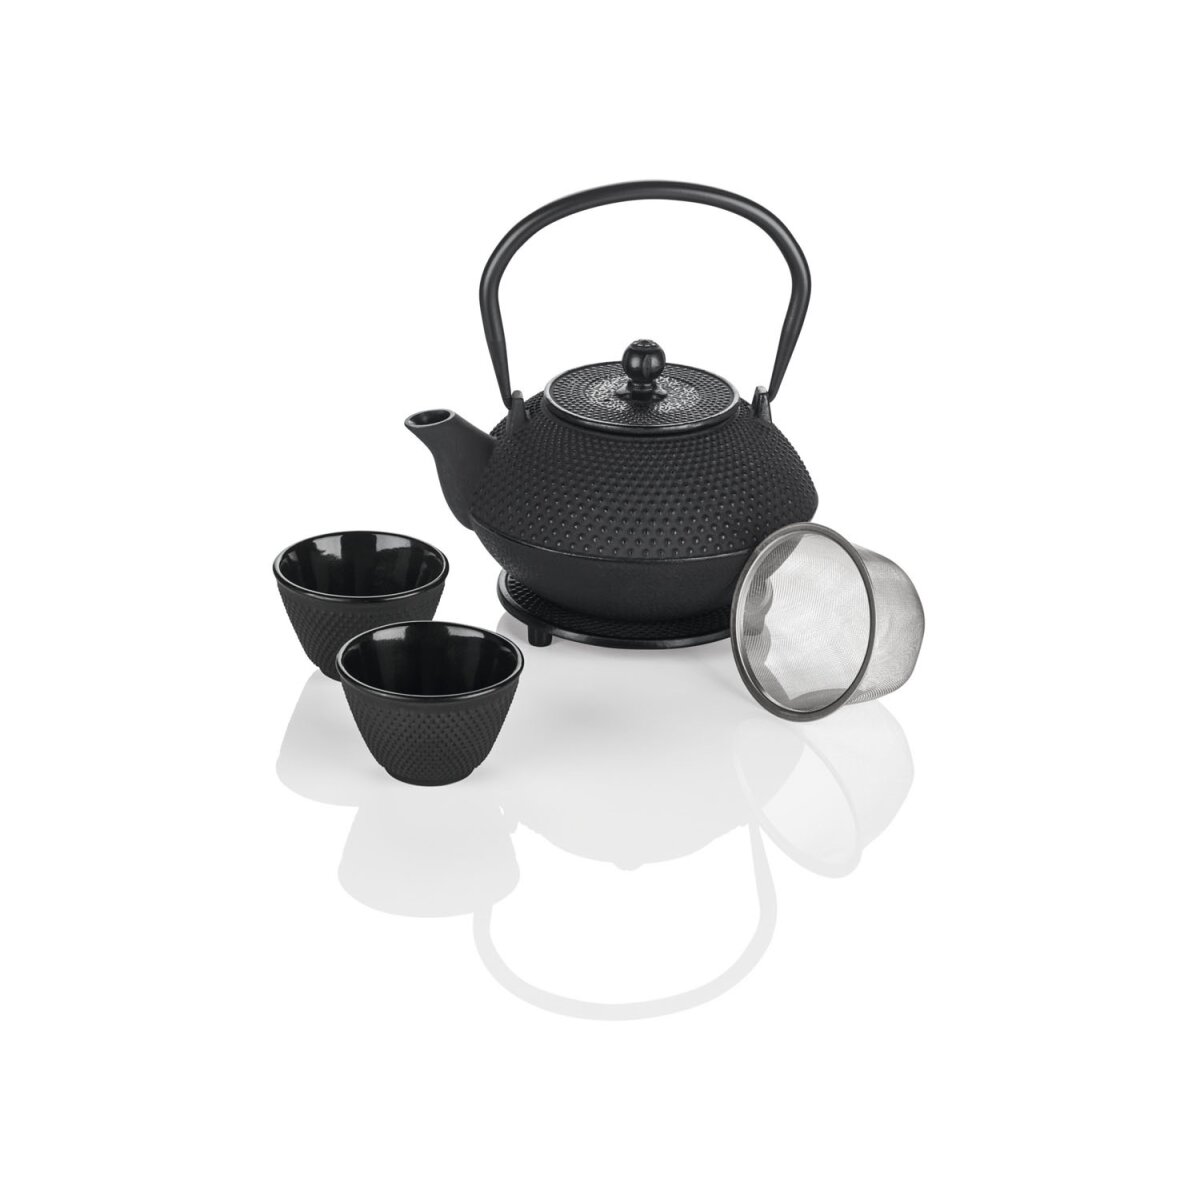 ERNESTO® Gusseisen-Tee-Set, 4-teilig, mit herausnehmbarem € gut, - 20,99 B-Ware sehr Teefilter